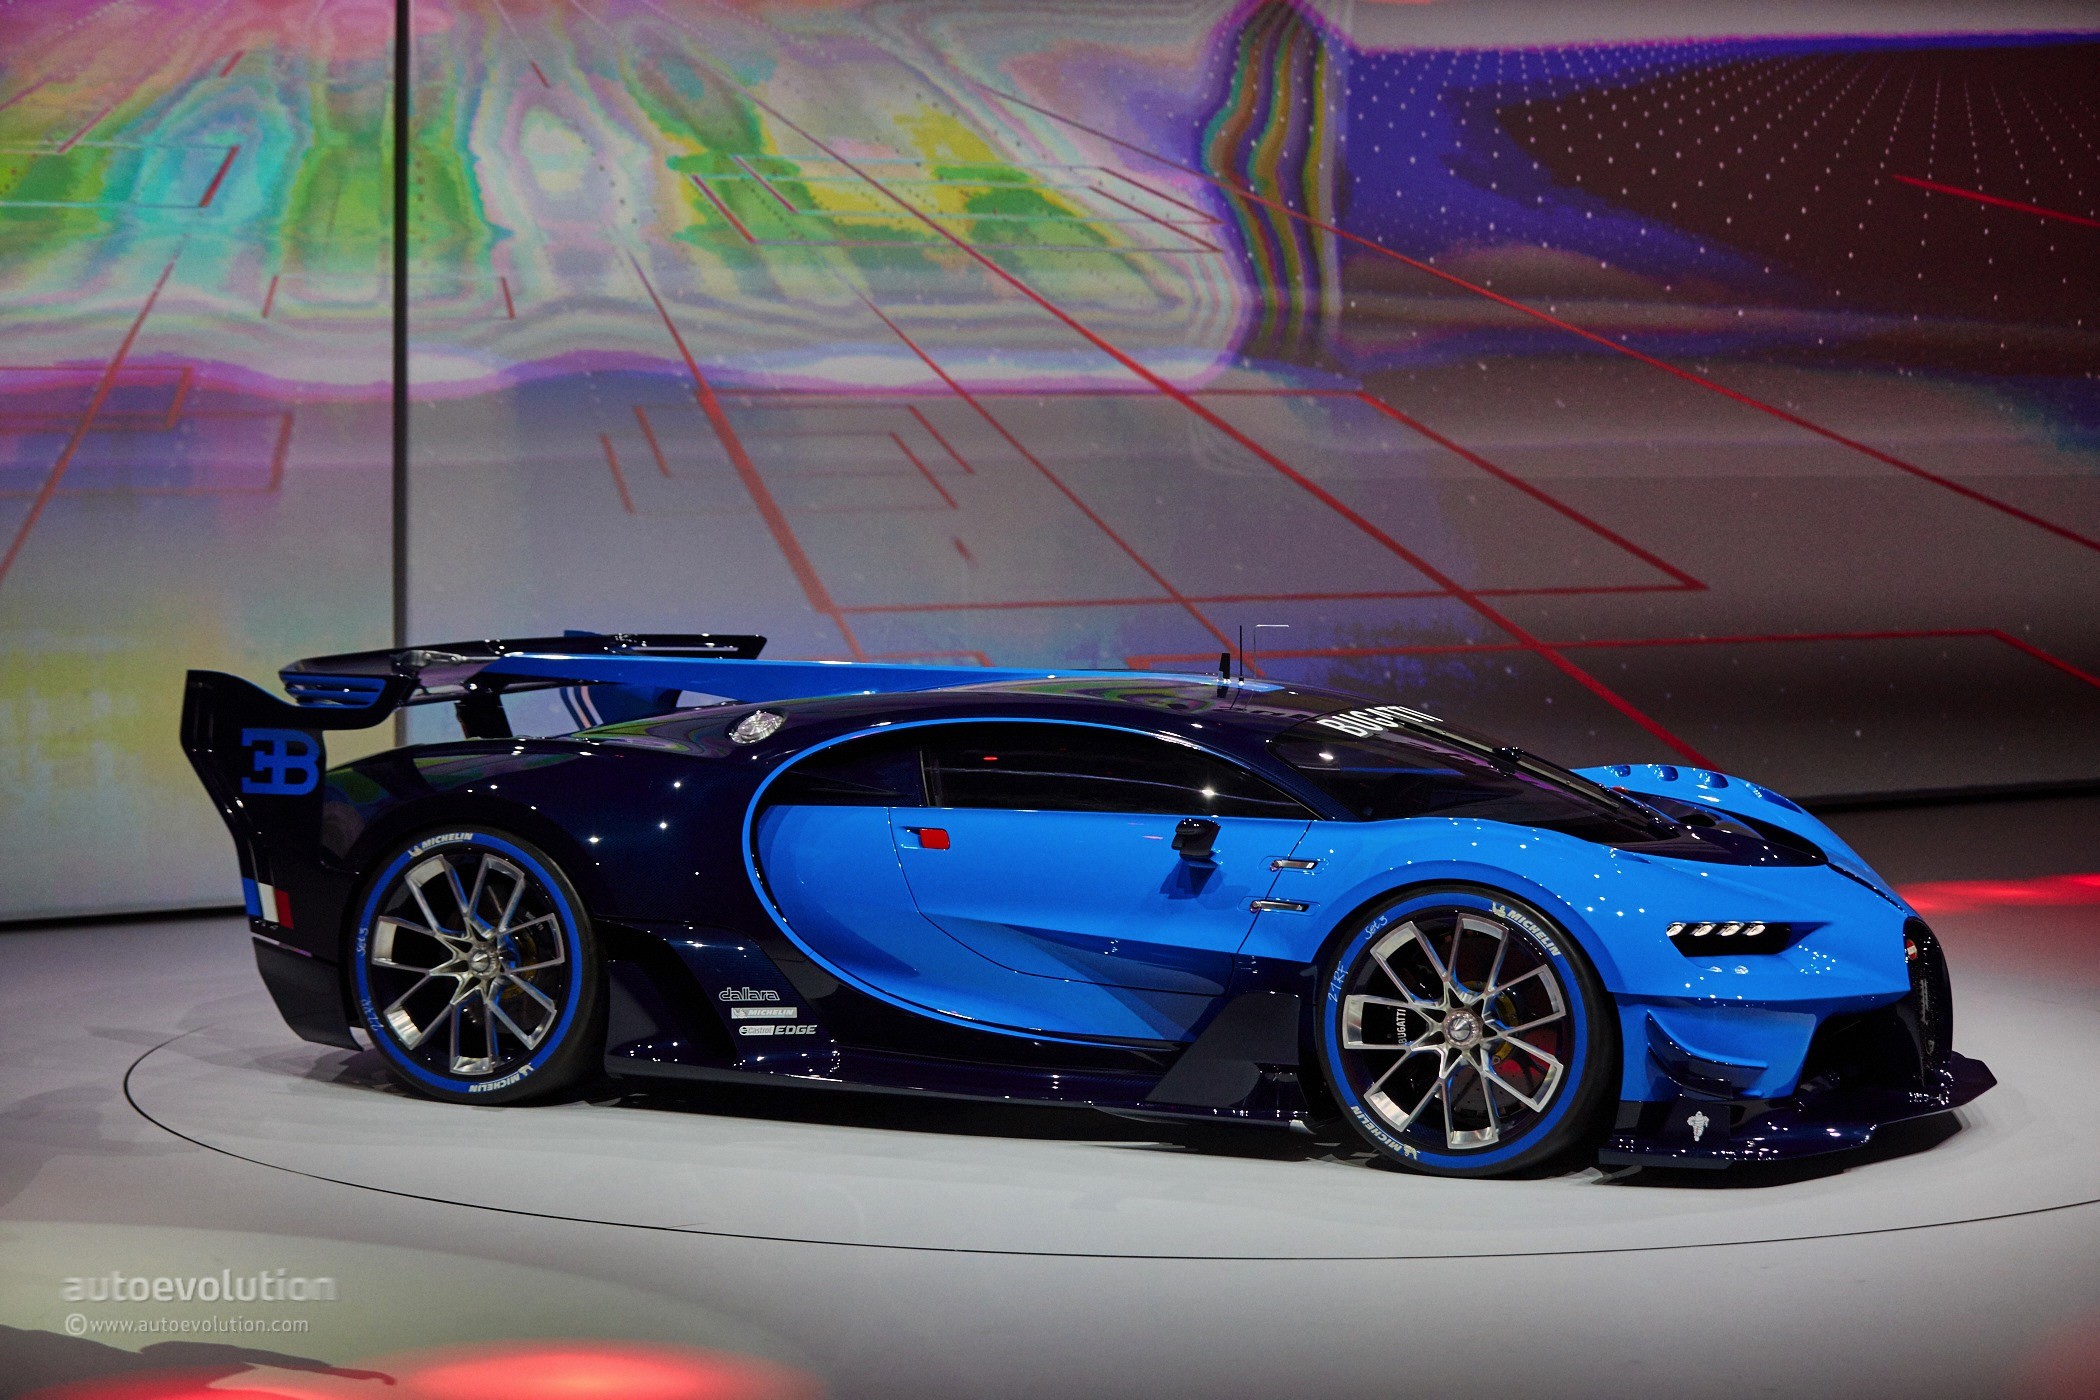 The €2.4 million Bugatti Chiron